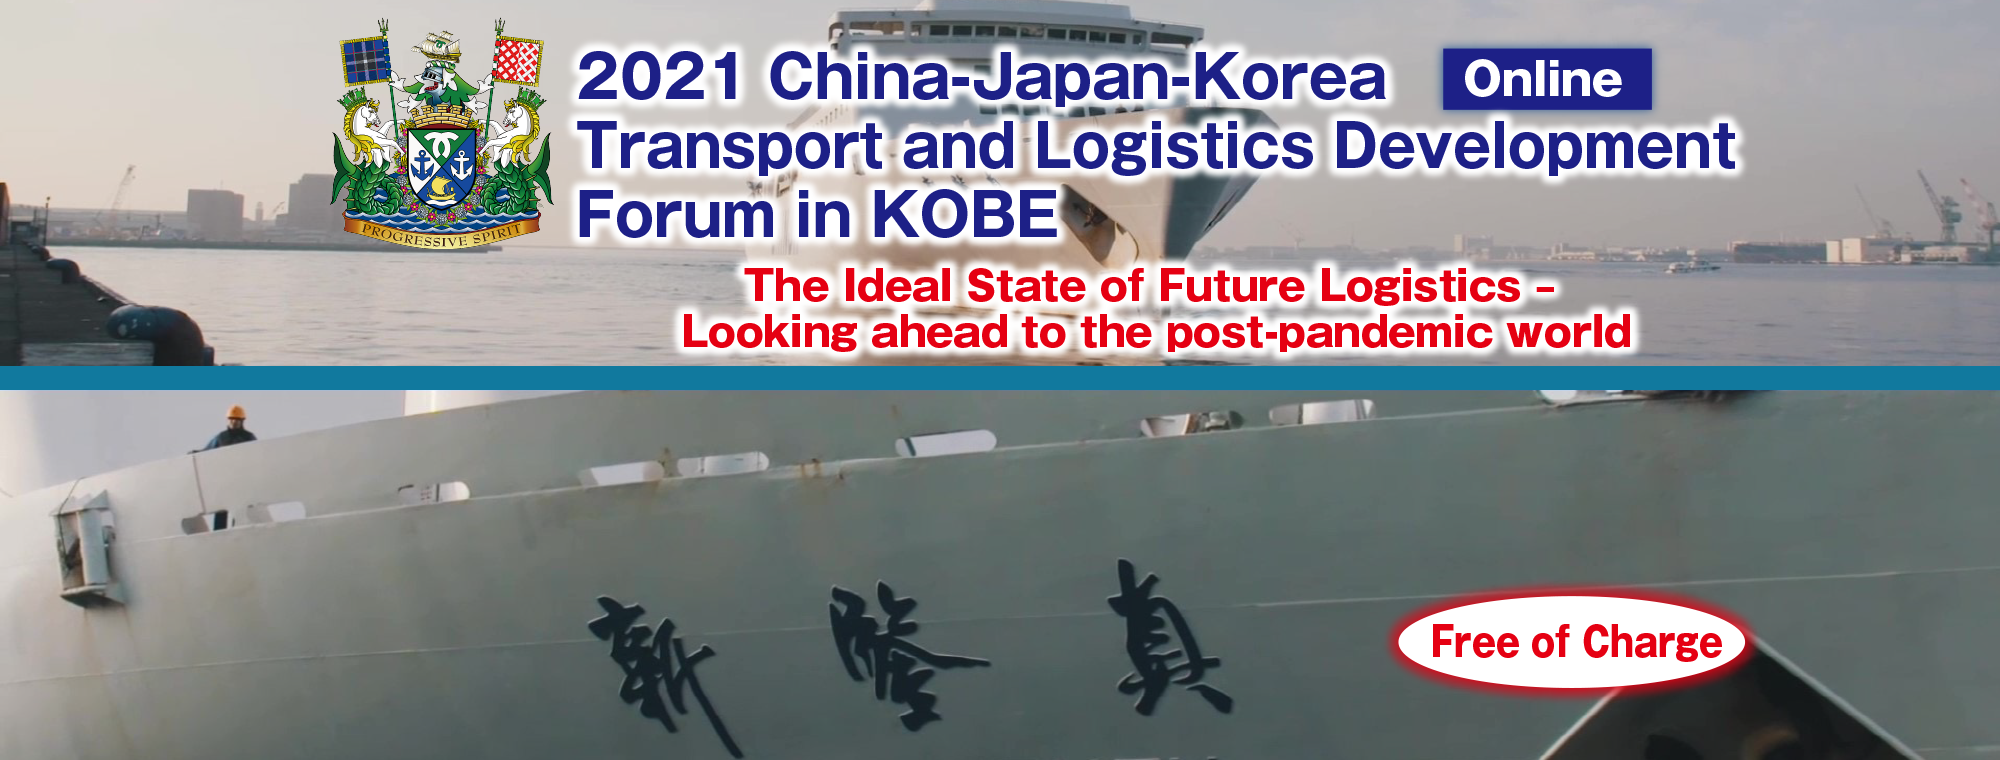 2021 China-Japan-Korea Transport and Logistics Development Forum in KOBE